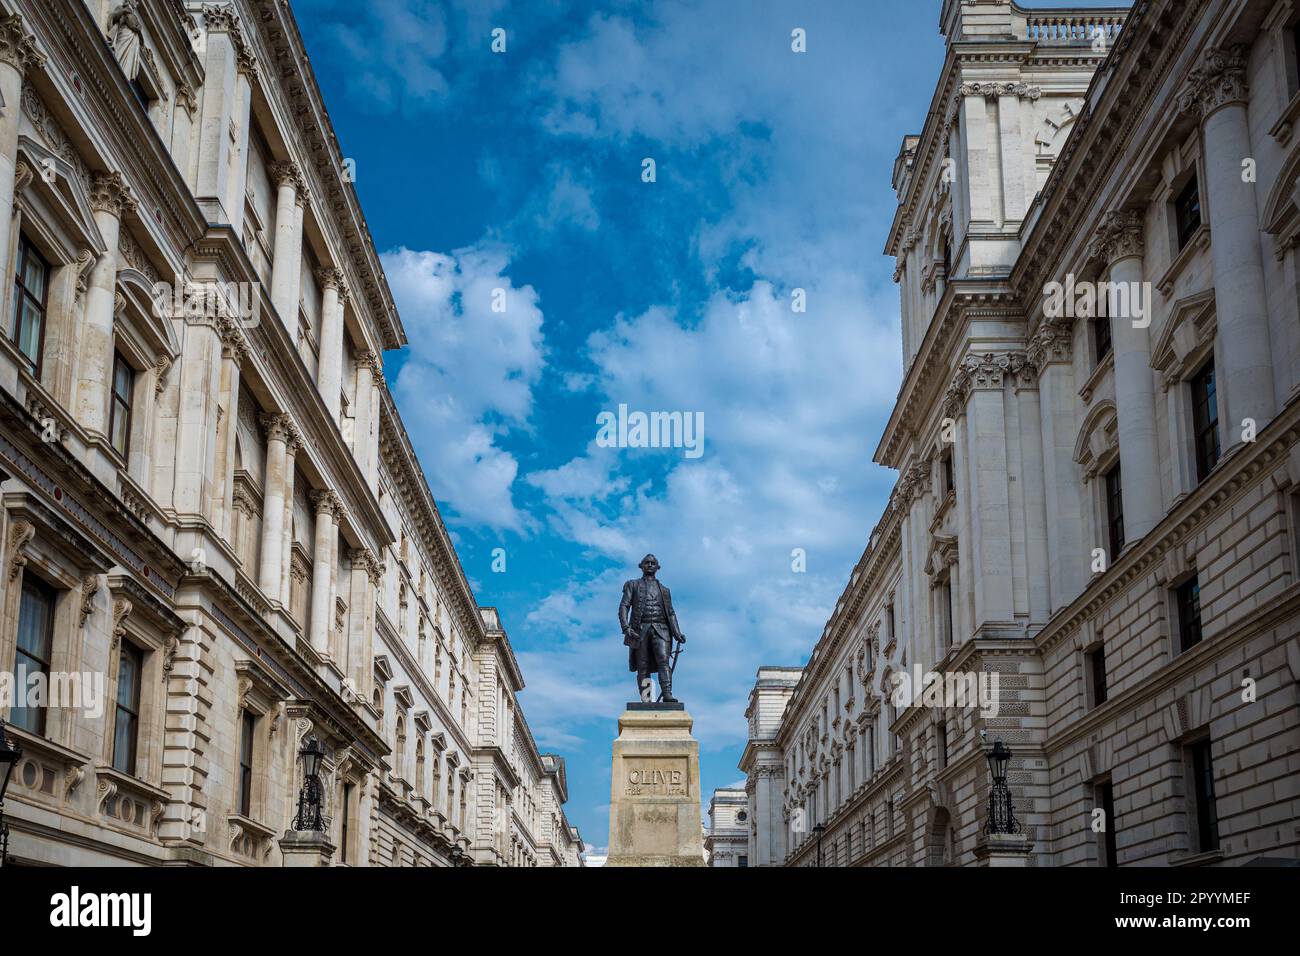 Robert Clive Statue London - Statue of Clive of India in der King Charles Street, Whitehall, London. Der Bildhauer John Tweed wurde 1912 enthüllt. Stockfoto